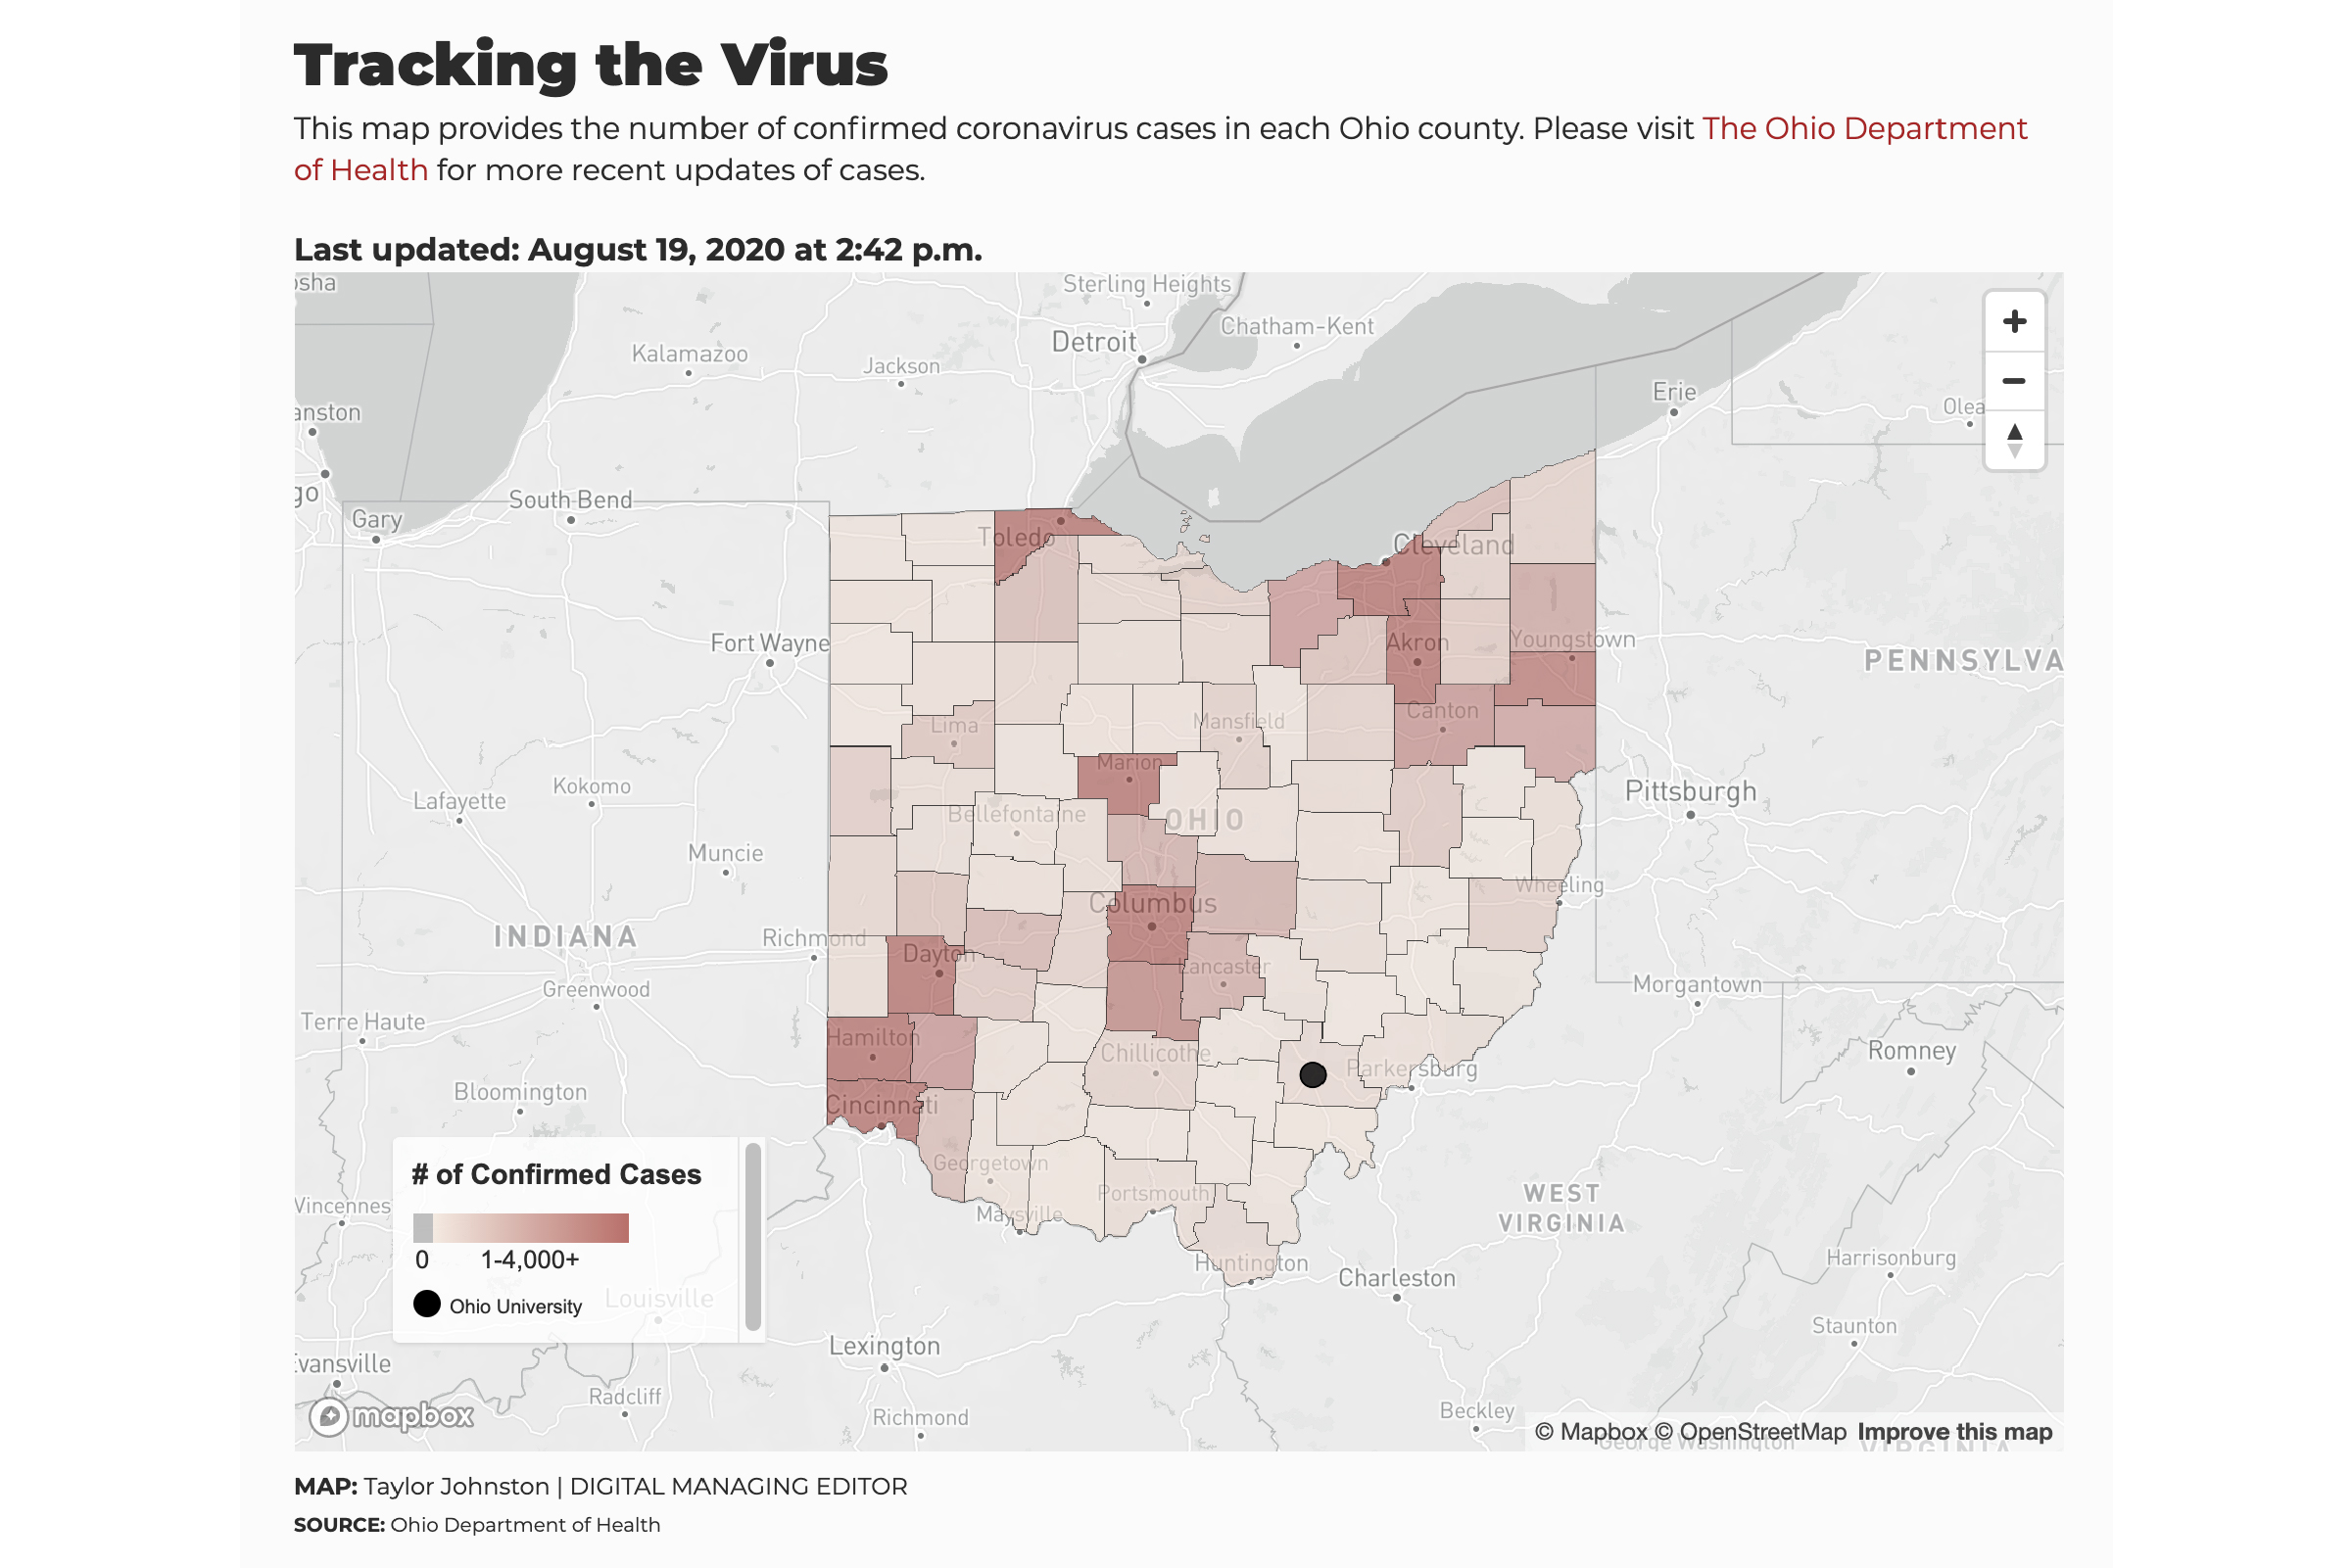 Choropleth map of Ohio coronavirus cases, focusing on Athens County